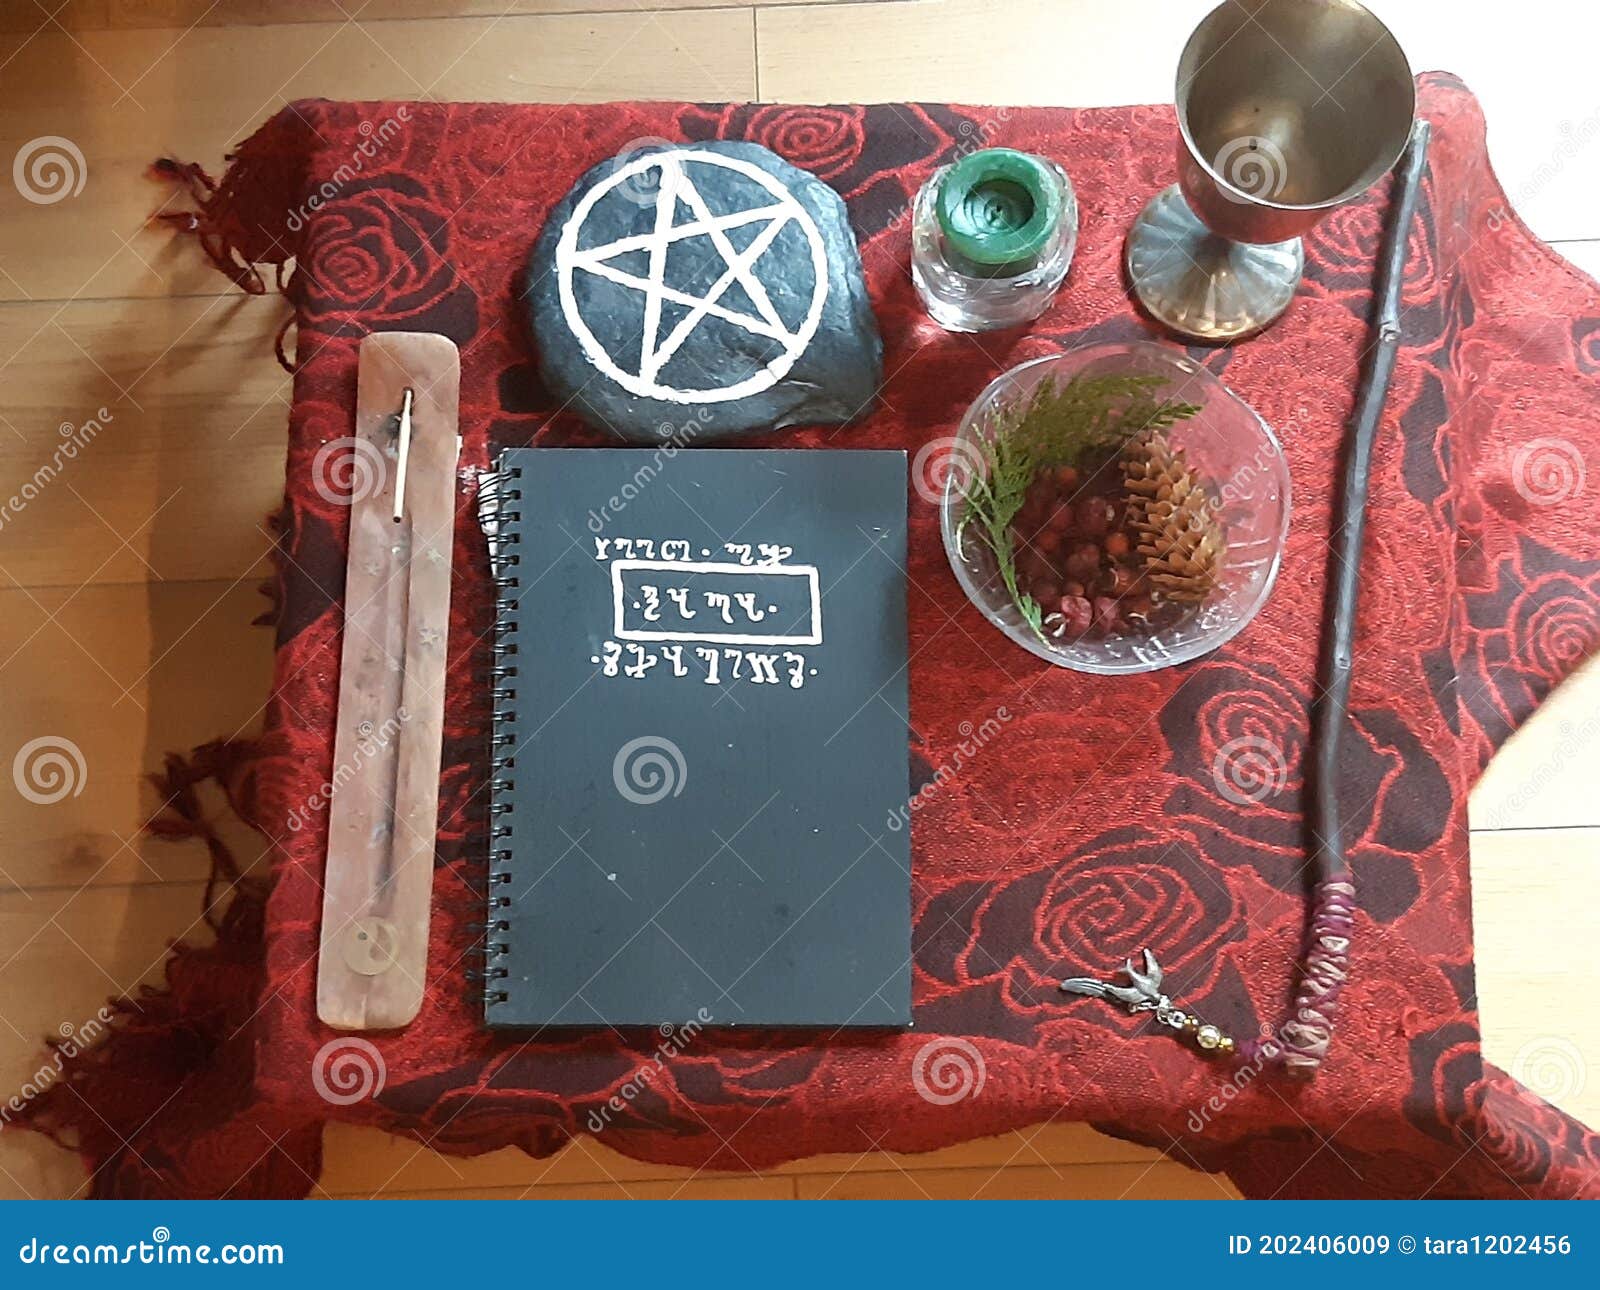 wiccan altar, fall altar setup, pagan magic ritual altar . book of shadows, wand, incense and candles